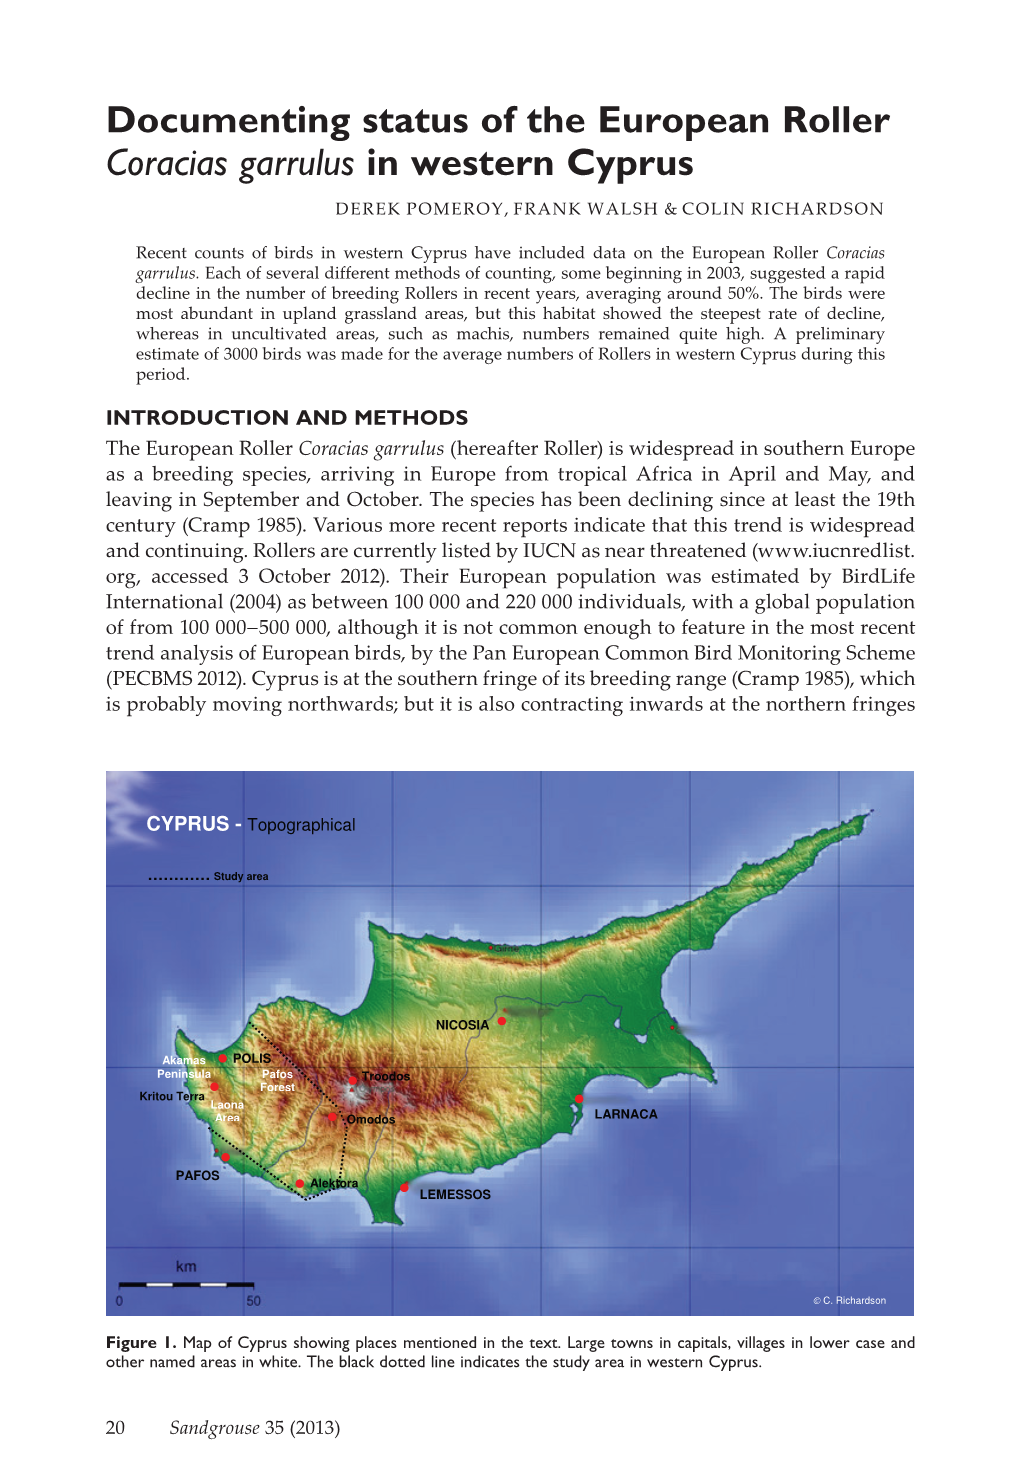 Documenting Status of the European Roller Coracias Garrulus in Western Cyprus Derek Pomeroy, Frank Walsh & Colin Richardson